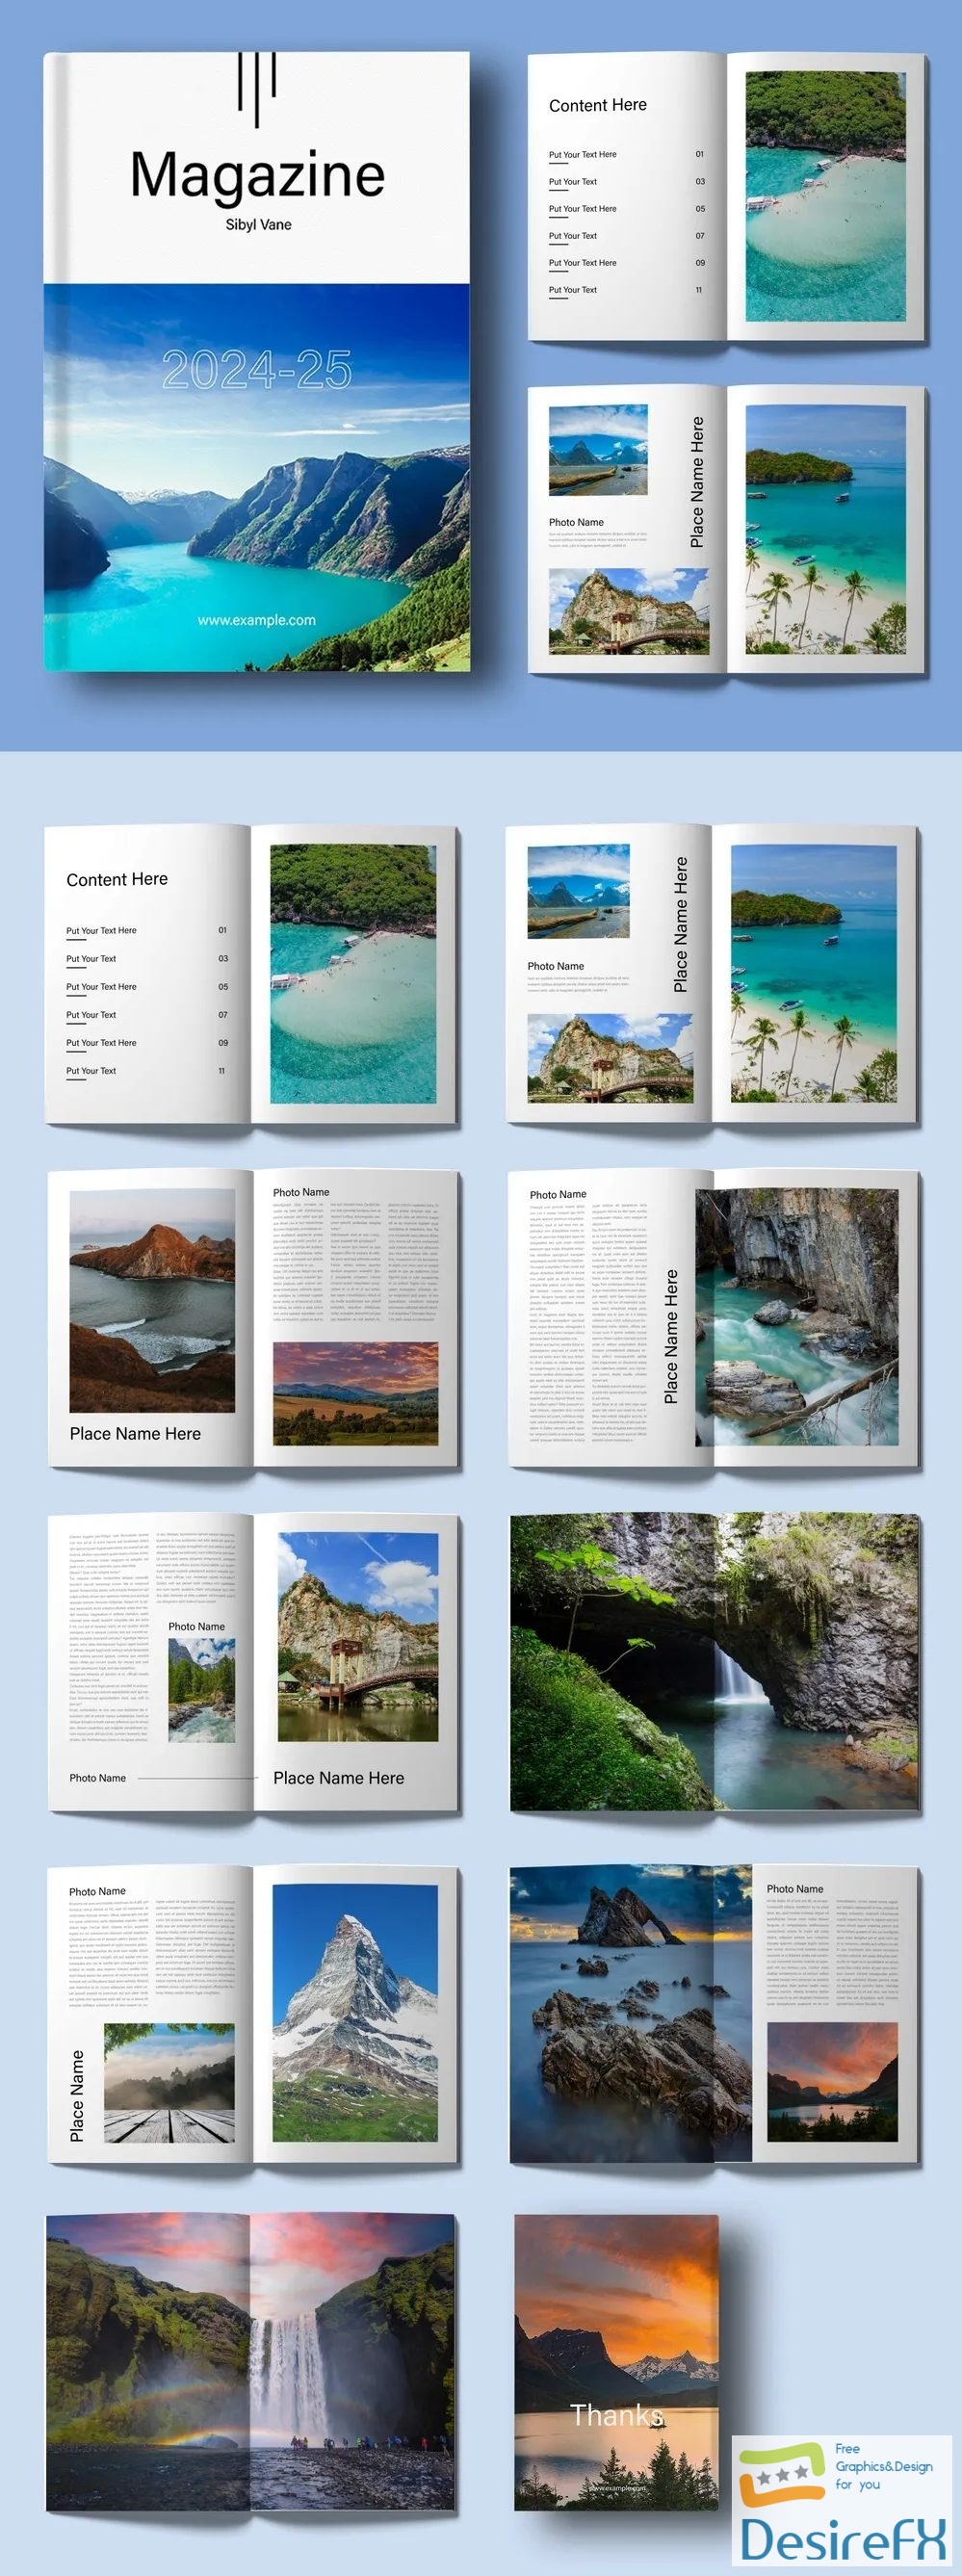 Adobestock - Magazine Template Layout 718538321